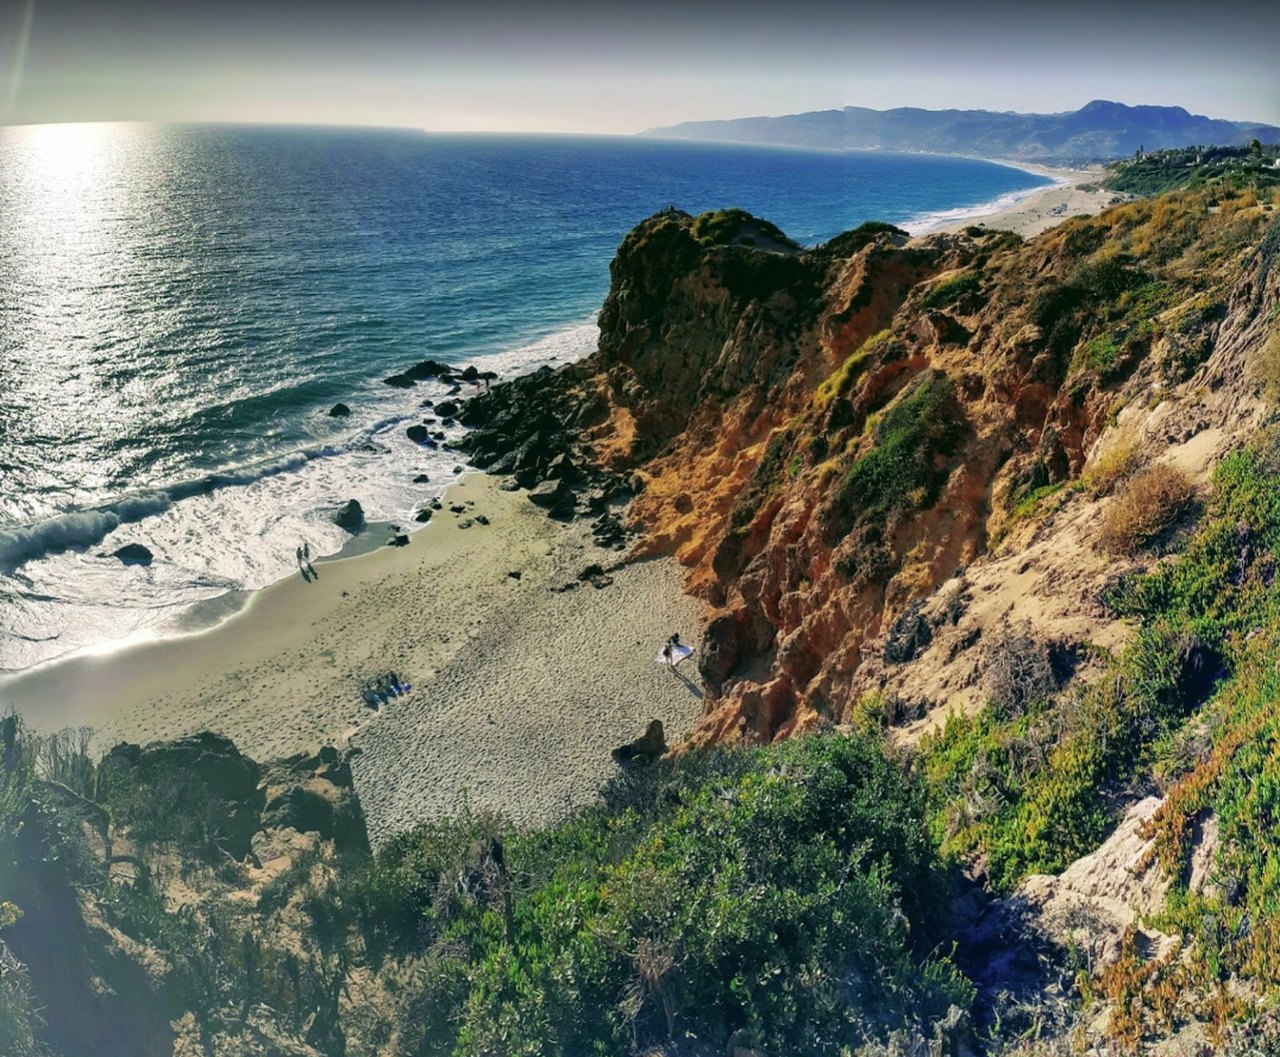 Malibu's Zuma Beach Ranks Among California's Best